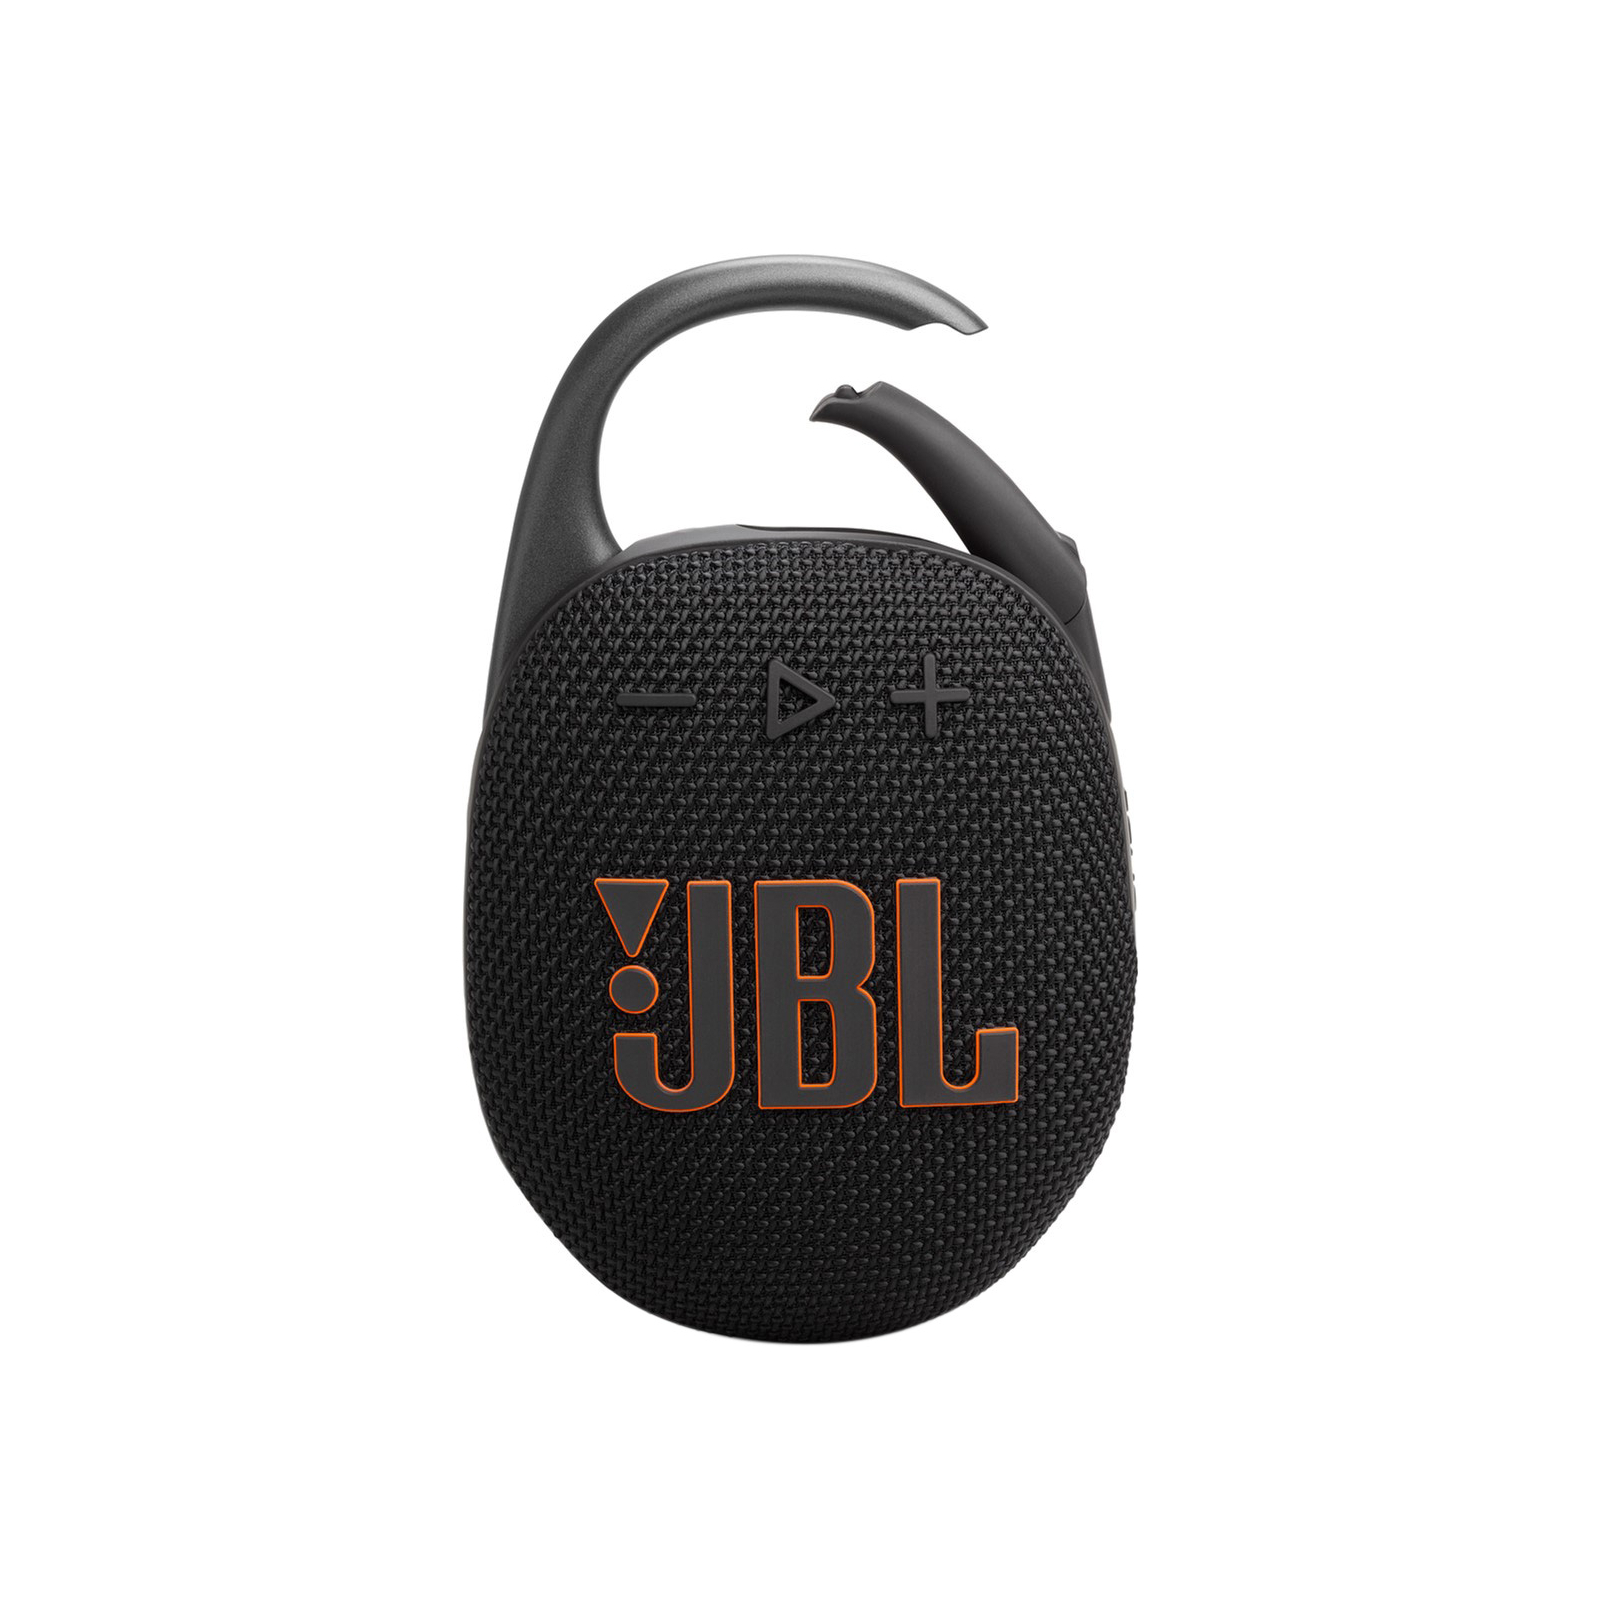 Акустическая система JBL Clip 5 Blue (JBLCLIP5BLU)